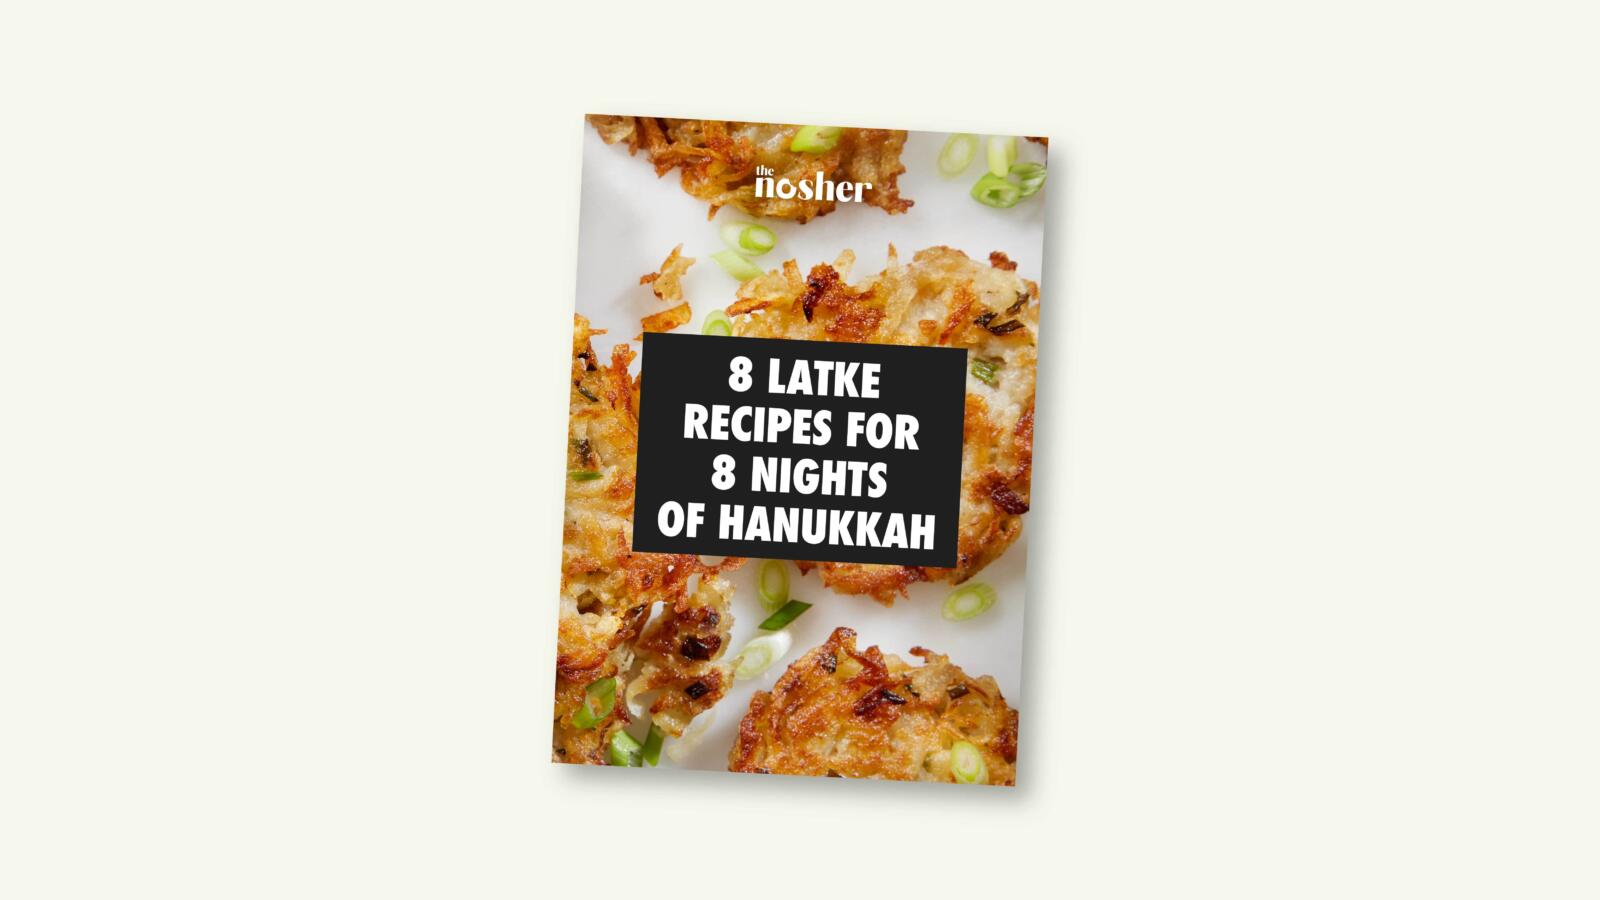 8 latke recipes for 8 nights of Hanukkah cookbook